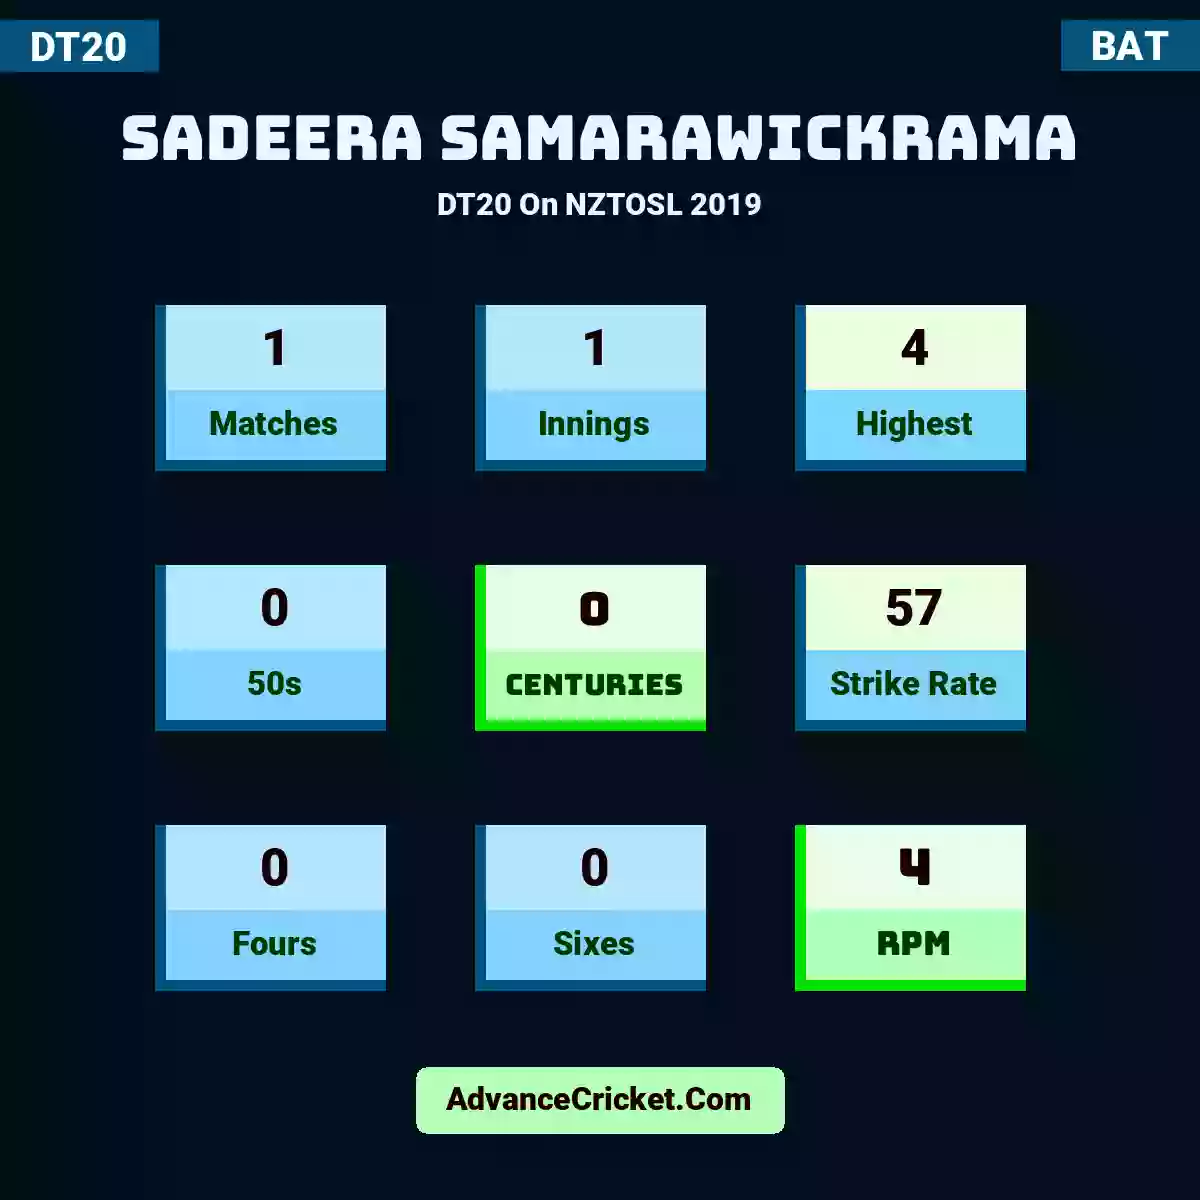 Sadeera Samarawickrama DT20  On NZTOSL 2019, Sadeera Samarawickrama played 1 matches, scored 4 runs as highest, 0 half-centuries, and 0 centuries, with a strike rate of 57. S.Samarawickrama hit 0 fours and 0 sixes, with an RPM of 4.